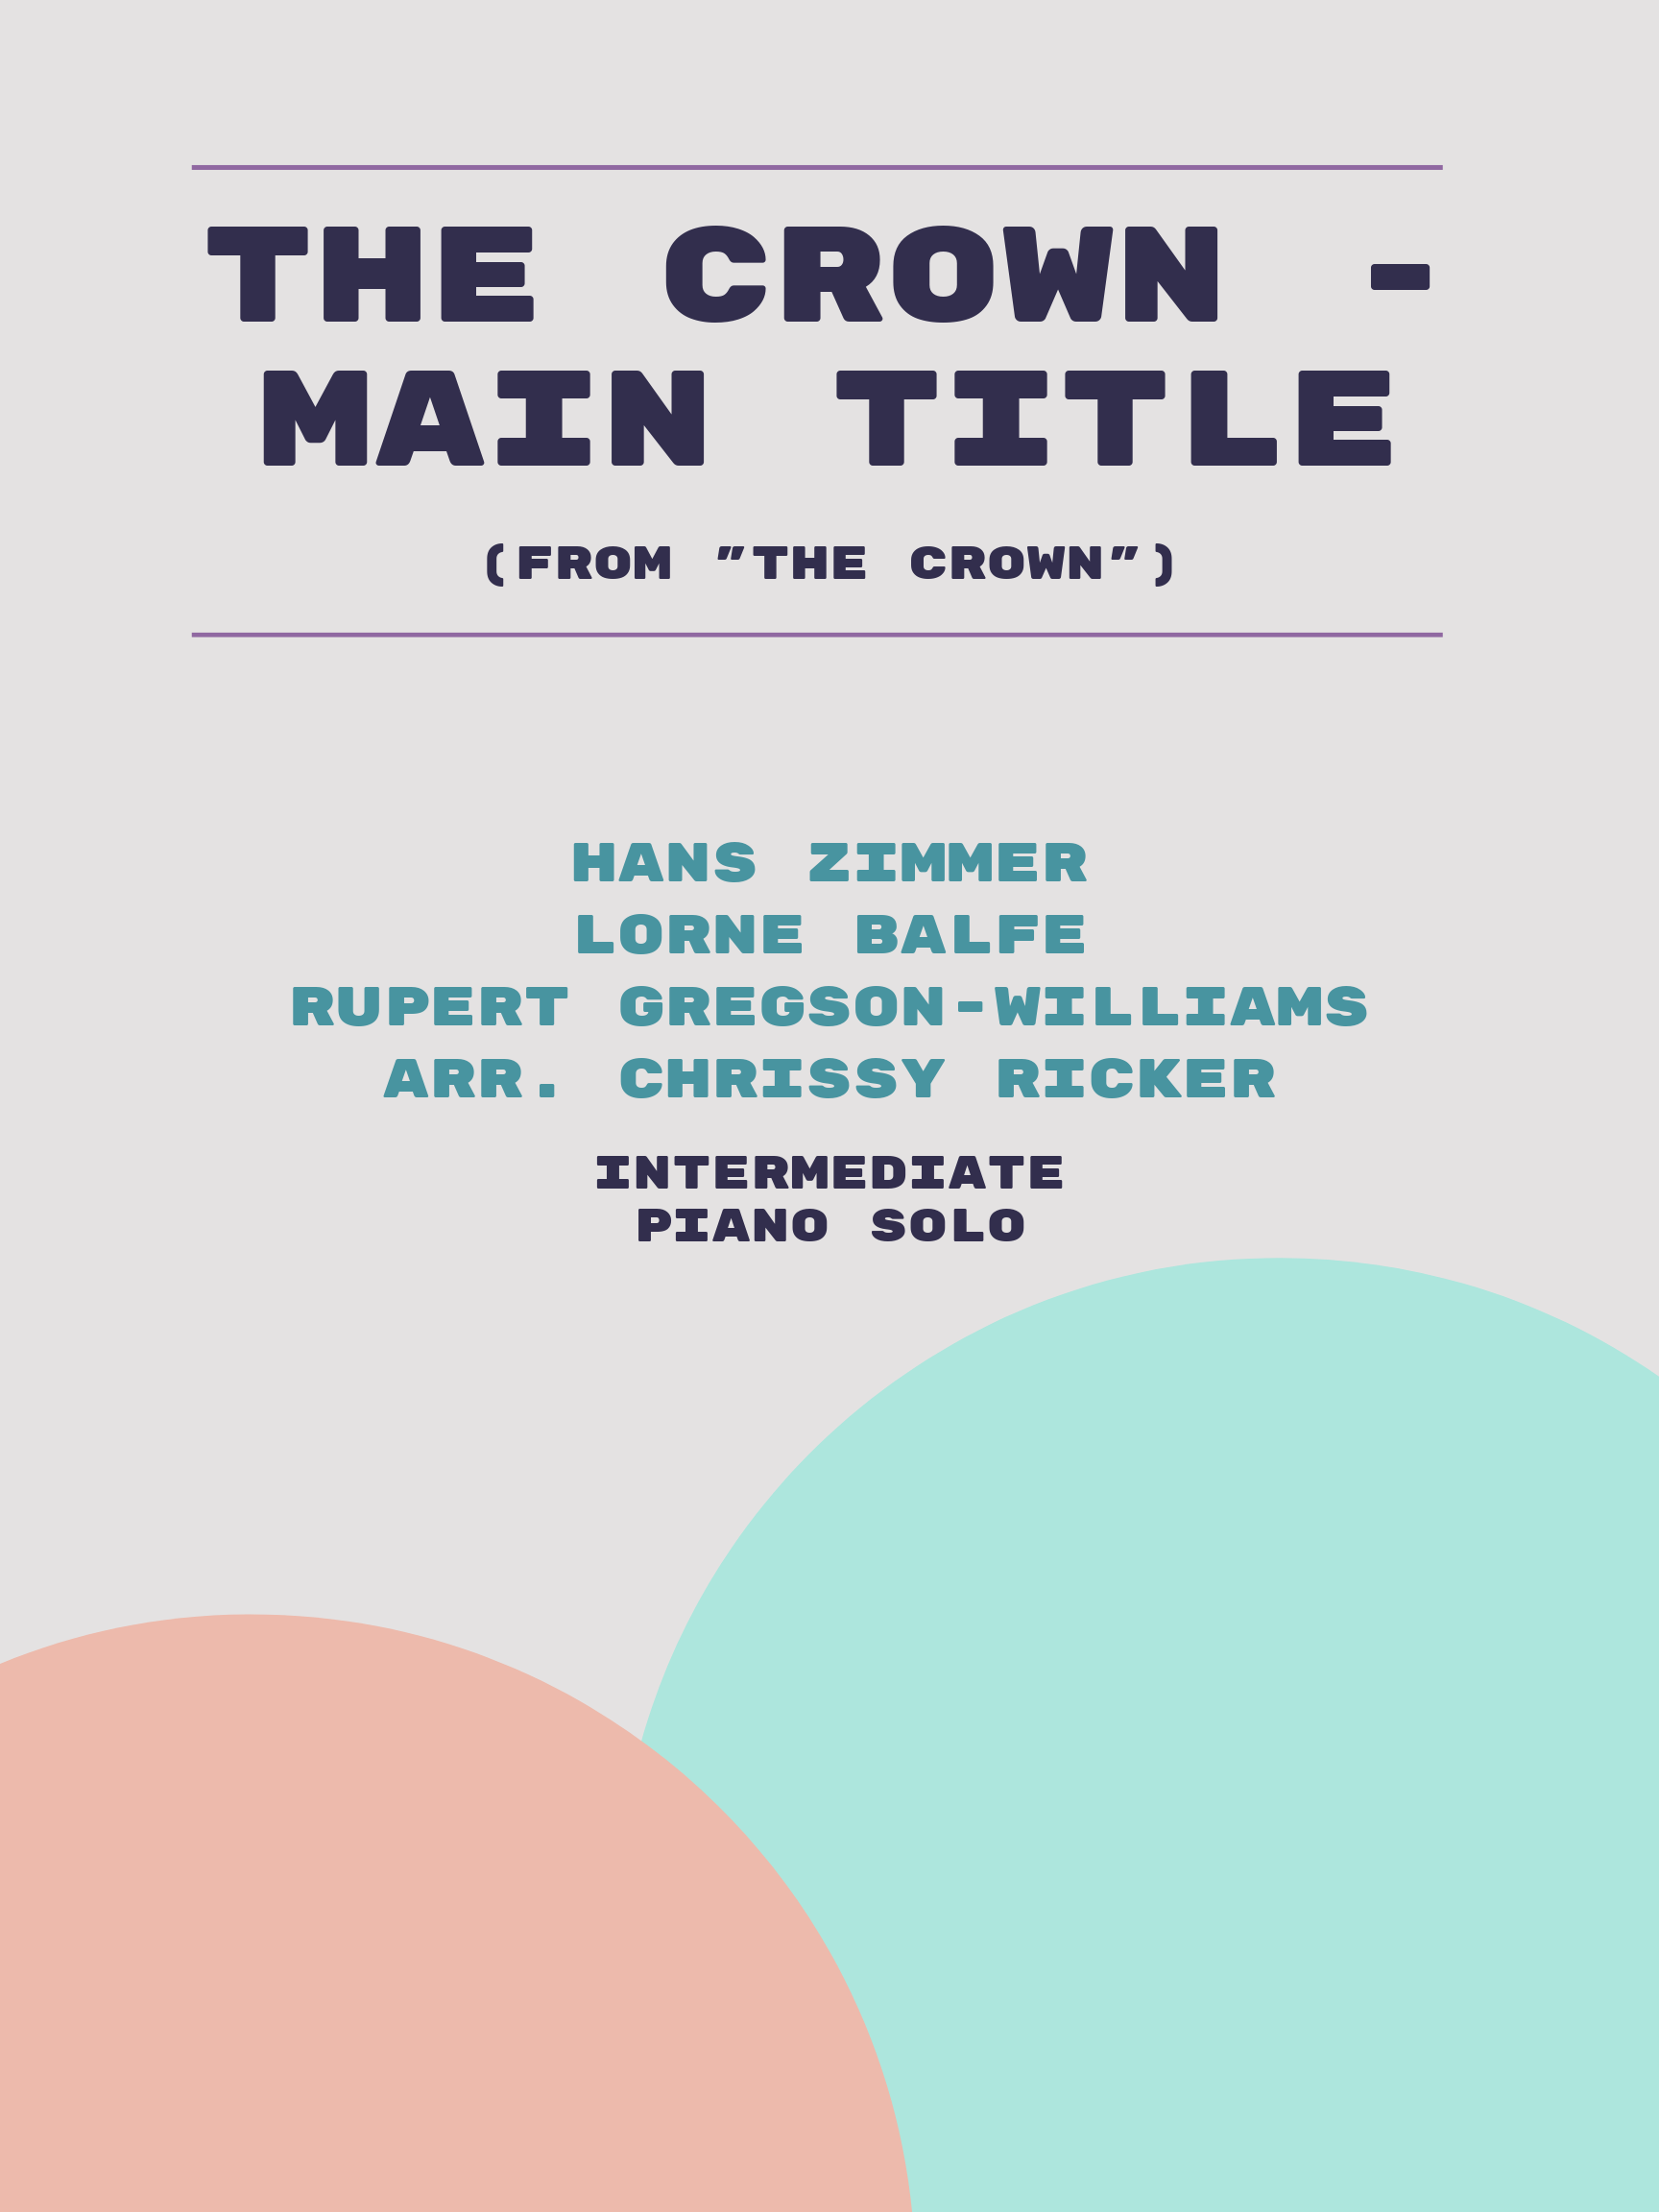 The Crown - Main Title by Hans Zimmer, Lorne Balfe, Rupert Gregson-Williams